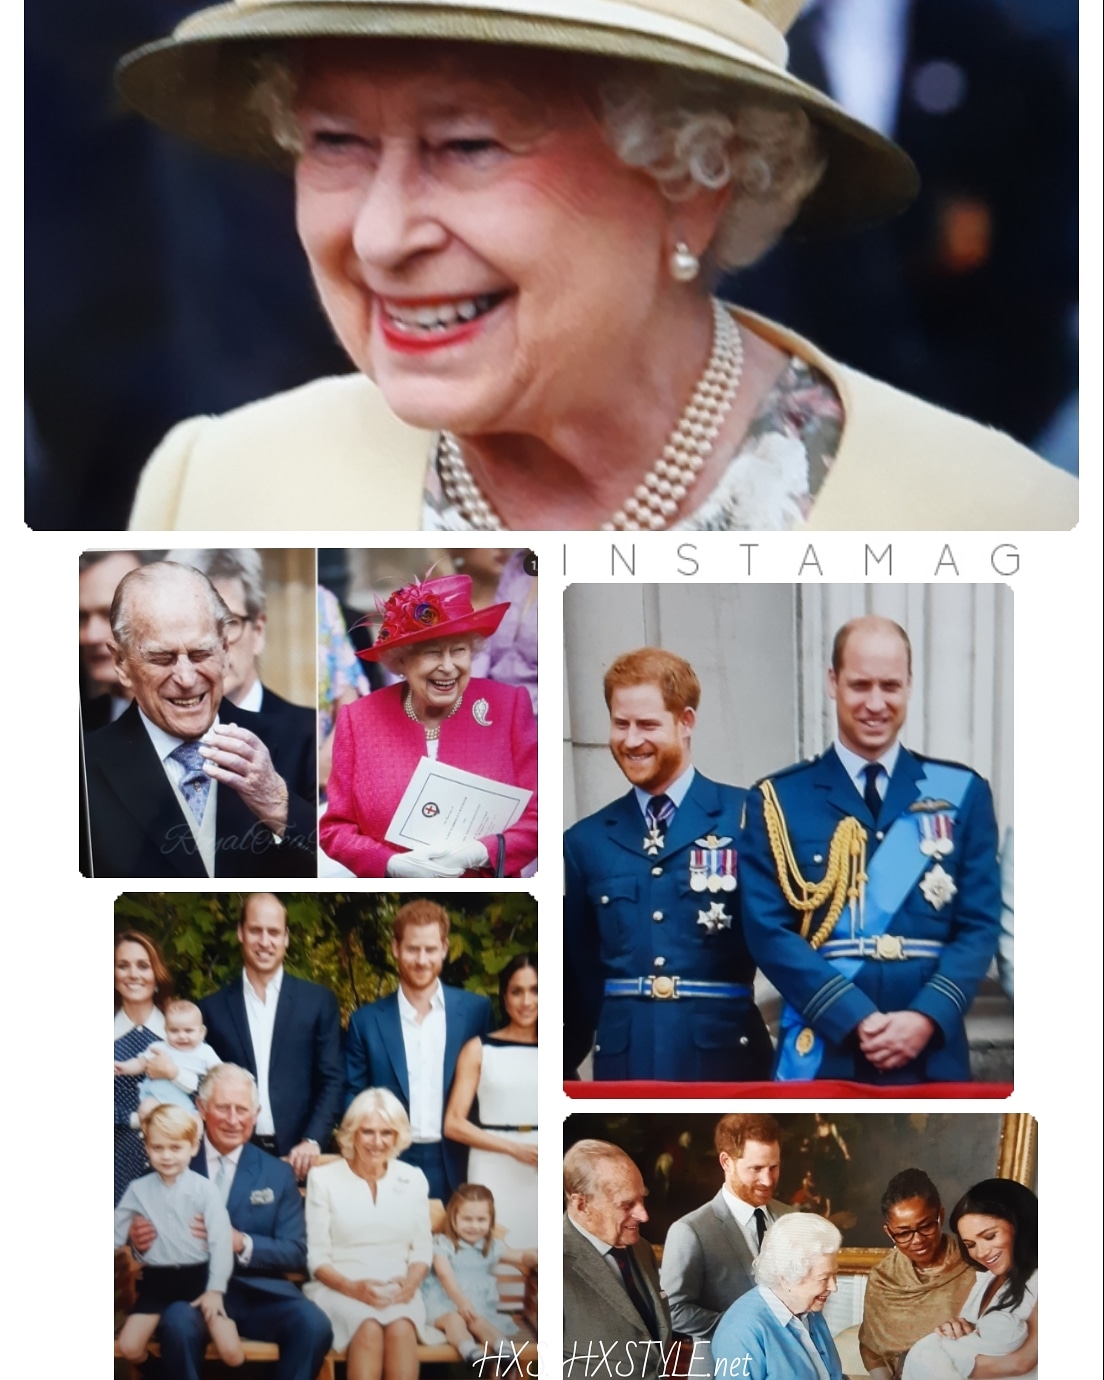 CULTURE. HISTORY. WORLD FAMOUS PEOPLE&FAMILY. ENGLAND ROYAL FAMILY, QUEEN&PRINCE, 4 GENERATION, Children&Grandchildren 2019…2016. NEWS&PHOTOS, 2019 NEWBORN Baby Boy, 2018 PRINCE HARRY &Megan Markle Wedding, Baby Boy, Crown Prince Charles 70 Birthday, 2017, 2016 CELEBRATE Birthdays QUEEN II 90 &PRINCE PHILIP 95…21.5.2019 Favourite. Lifestyleblog&Fashion HXS. HXSTYLE.net